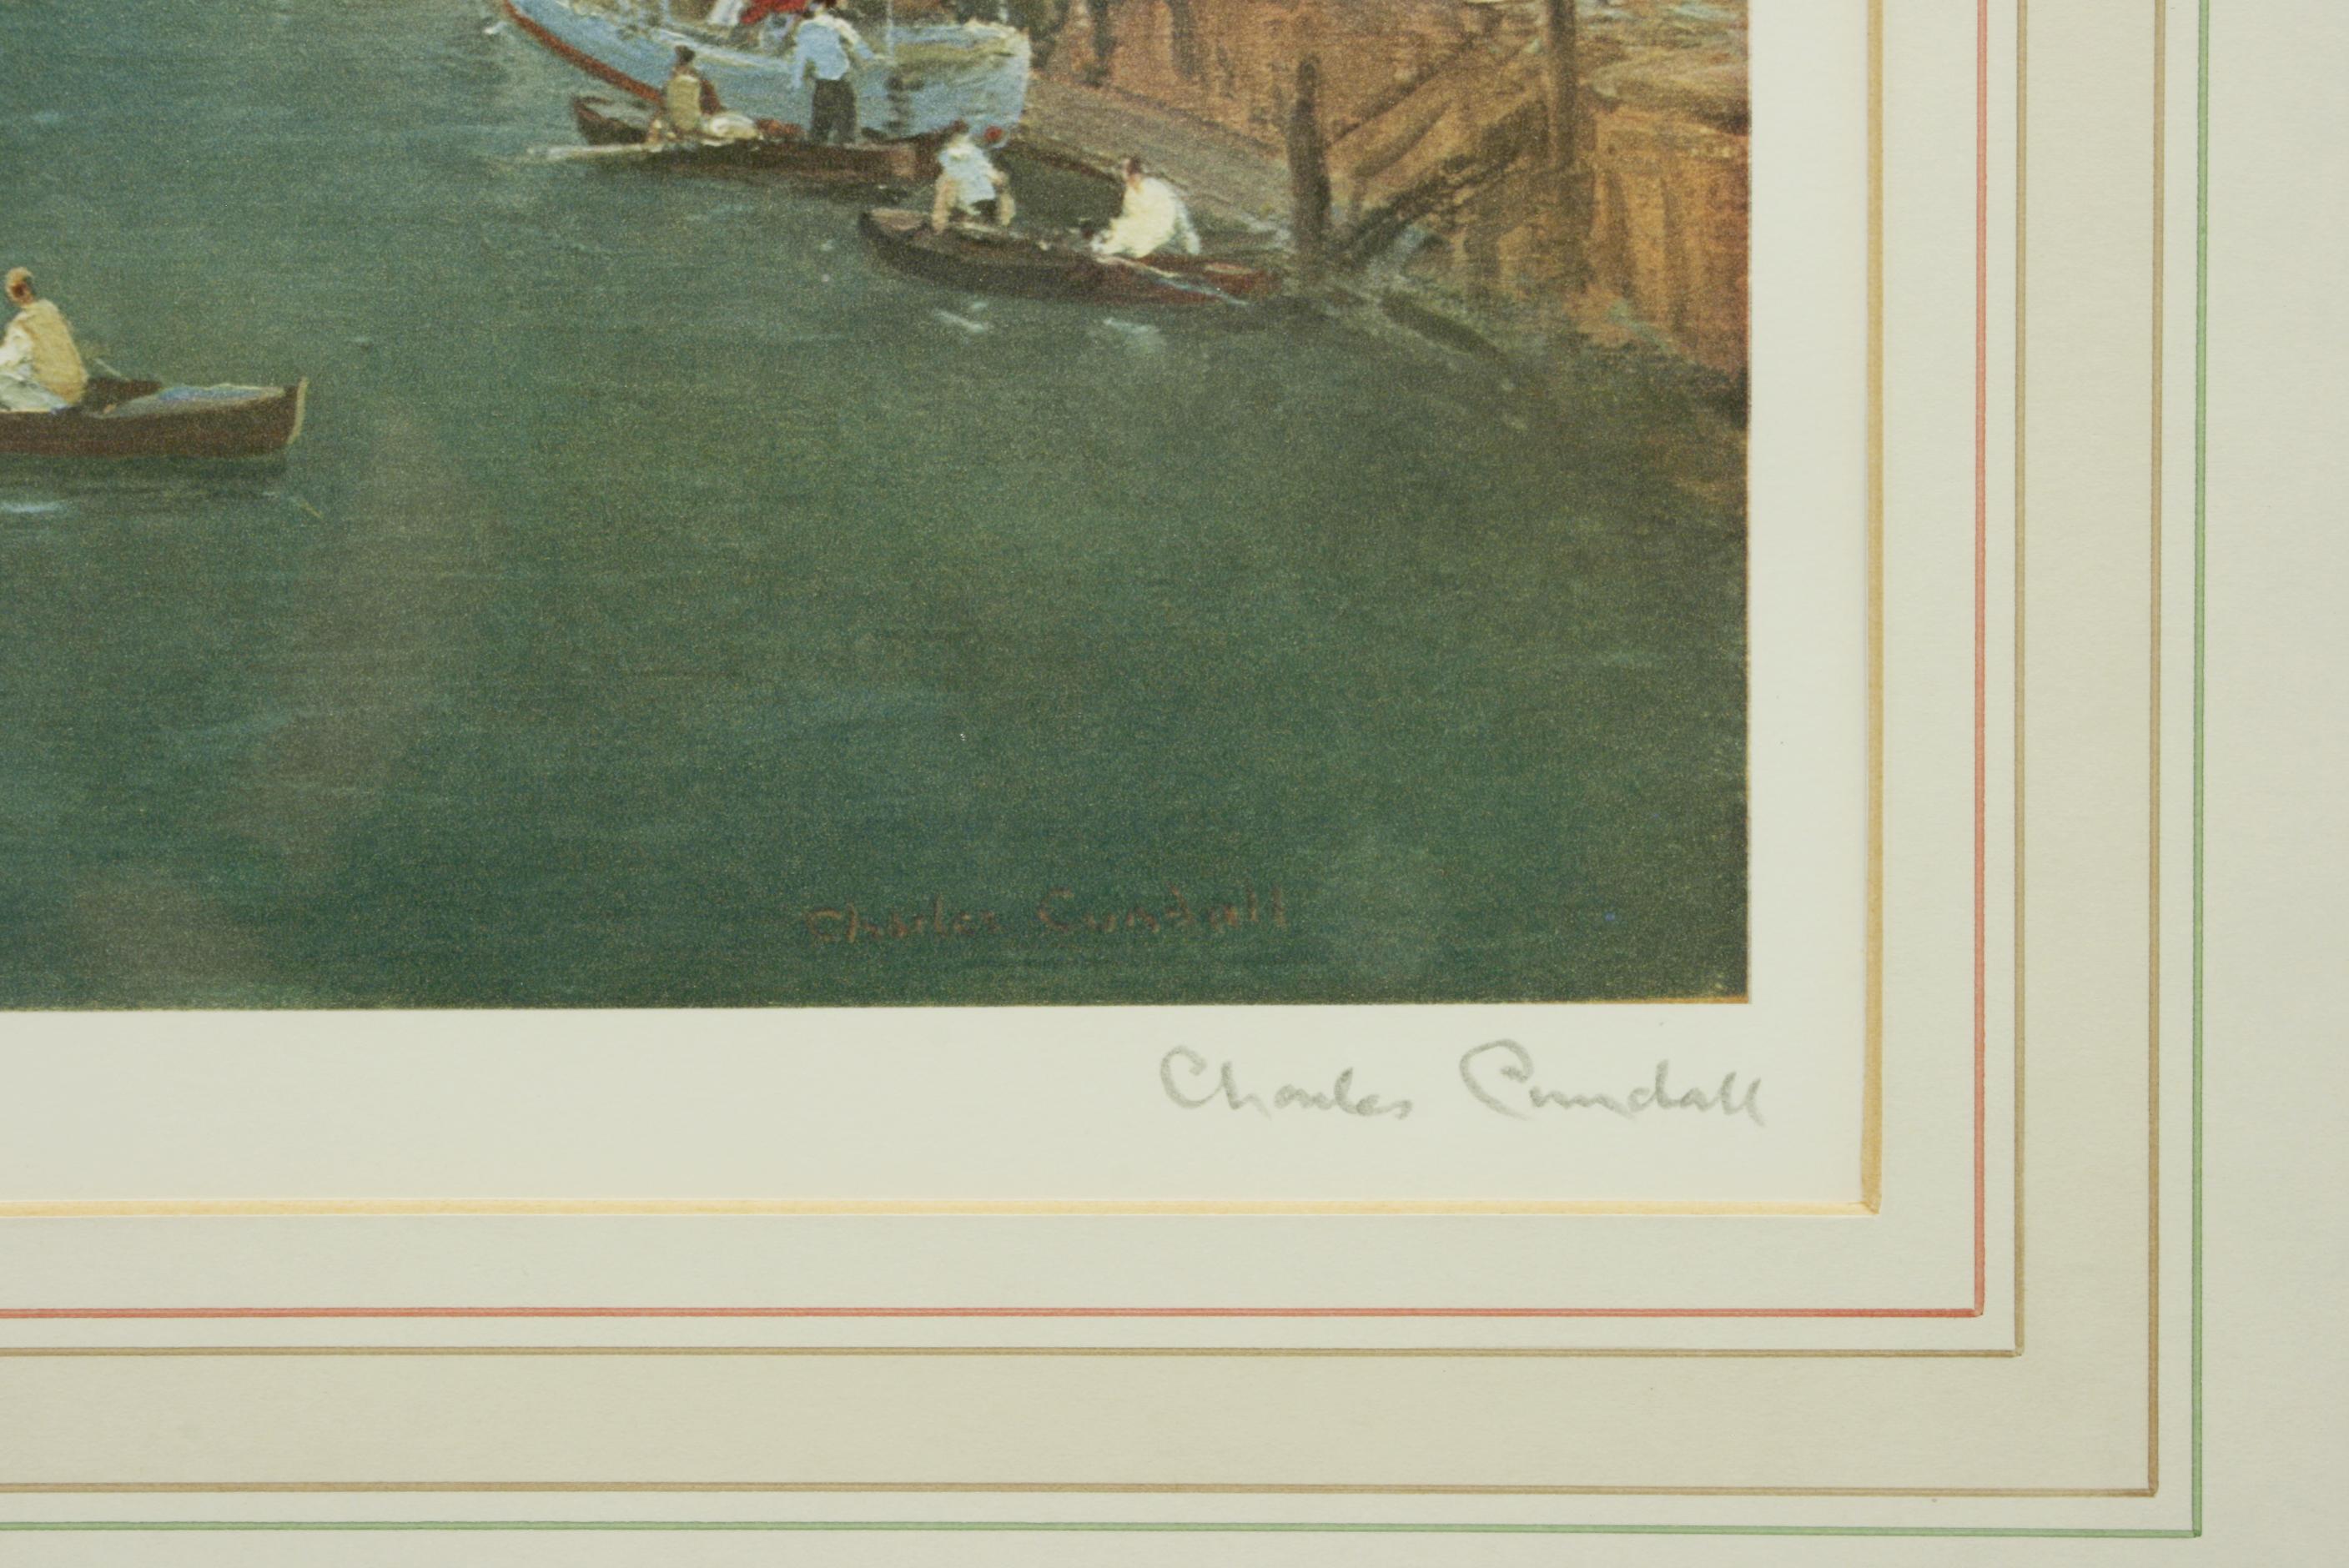 Sporting Art Henley Royal Regatta by Charles Cundall